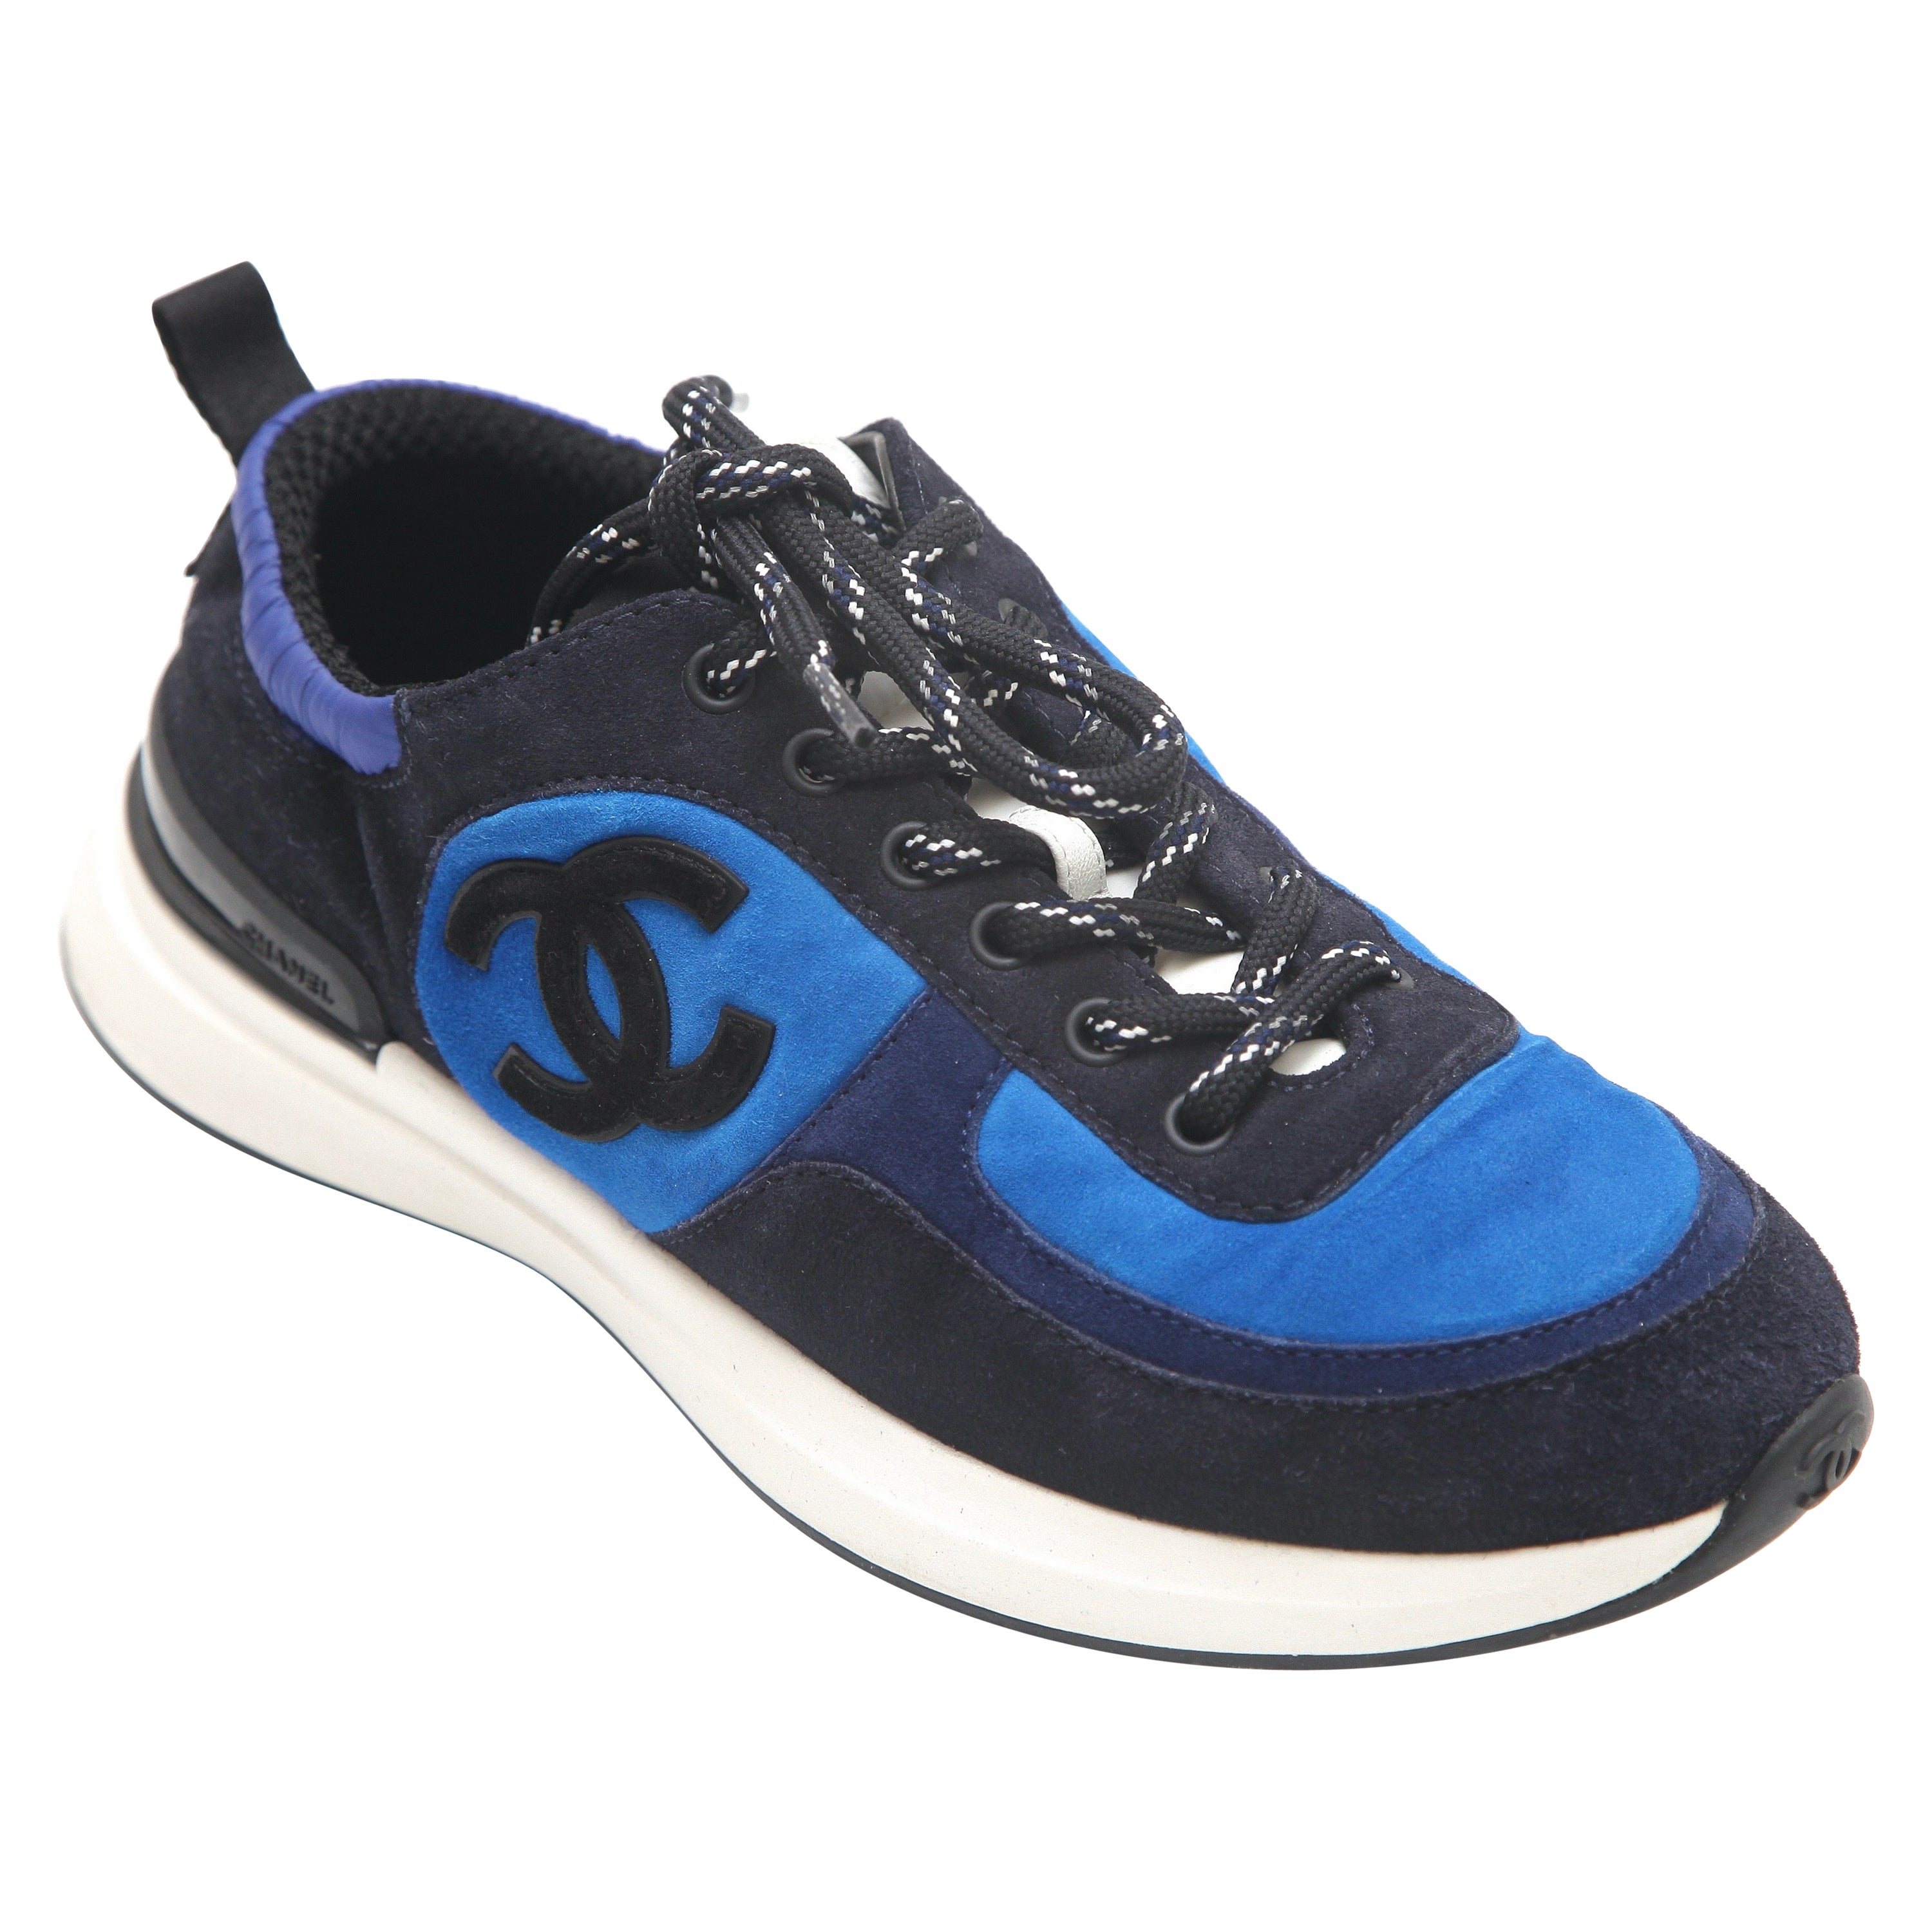 CHANEL Sneaker Trainer Suede Blue Black CC Logo Lace-Up Low Top Sz 38 2021